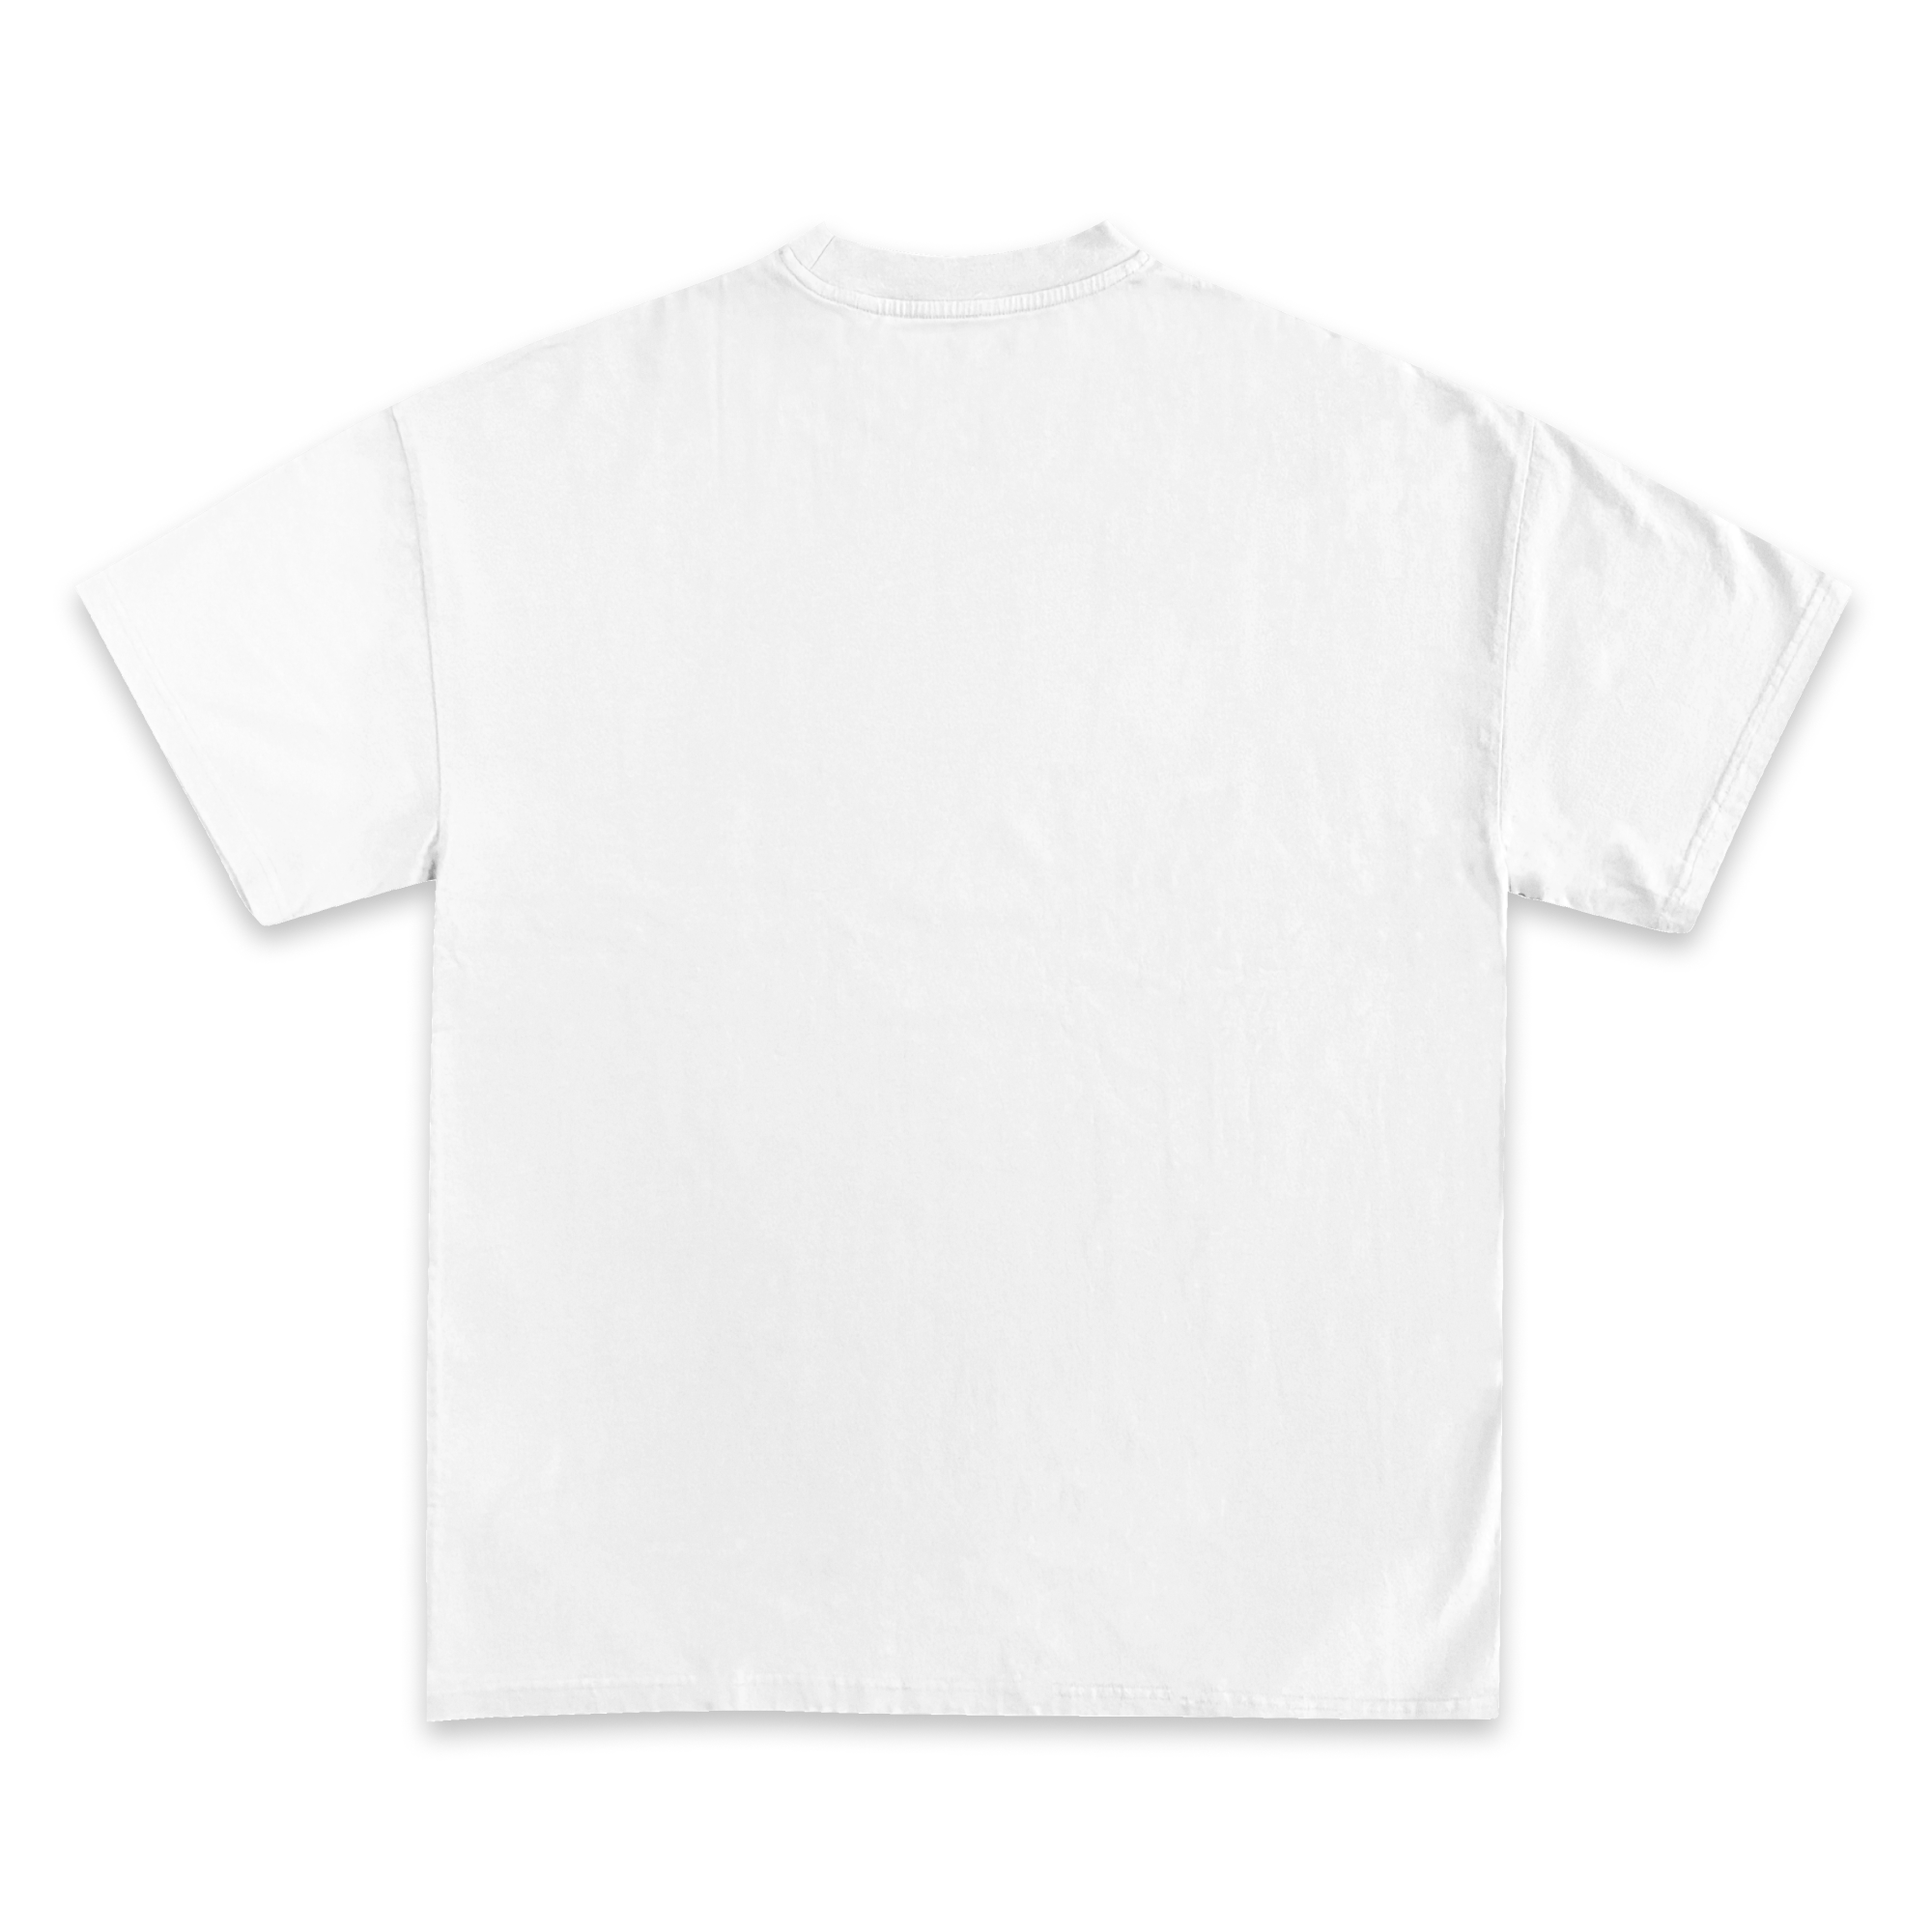 Pharrell Williams Graphic T-Shirt